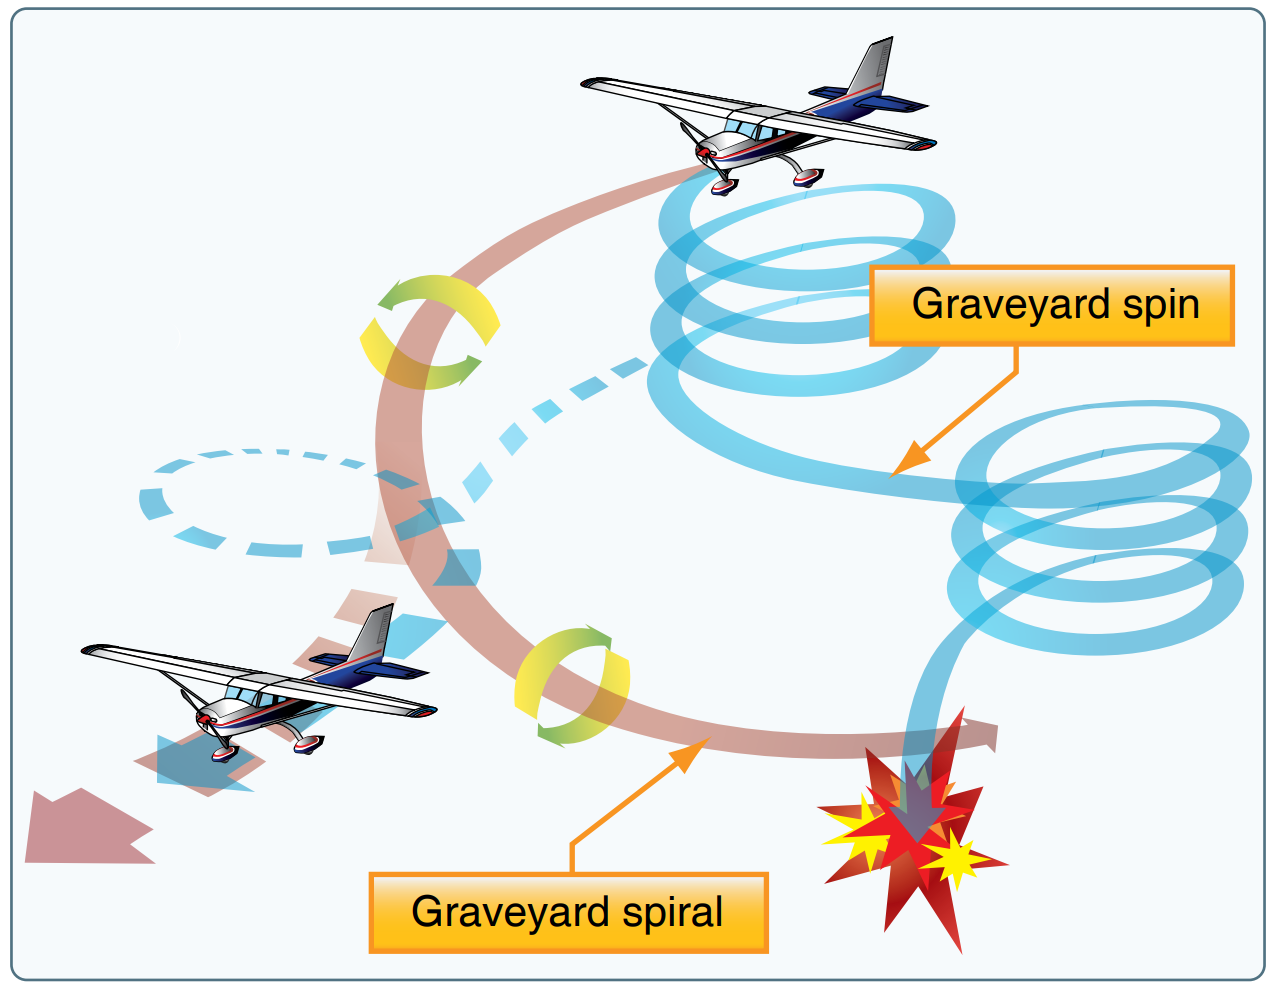 Graveyard Spin vs a Graveyard Spiral - FAA PHAK